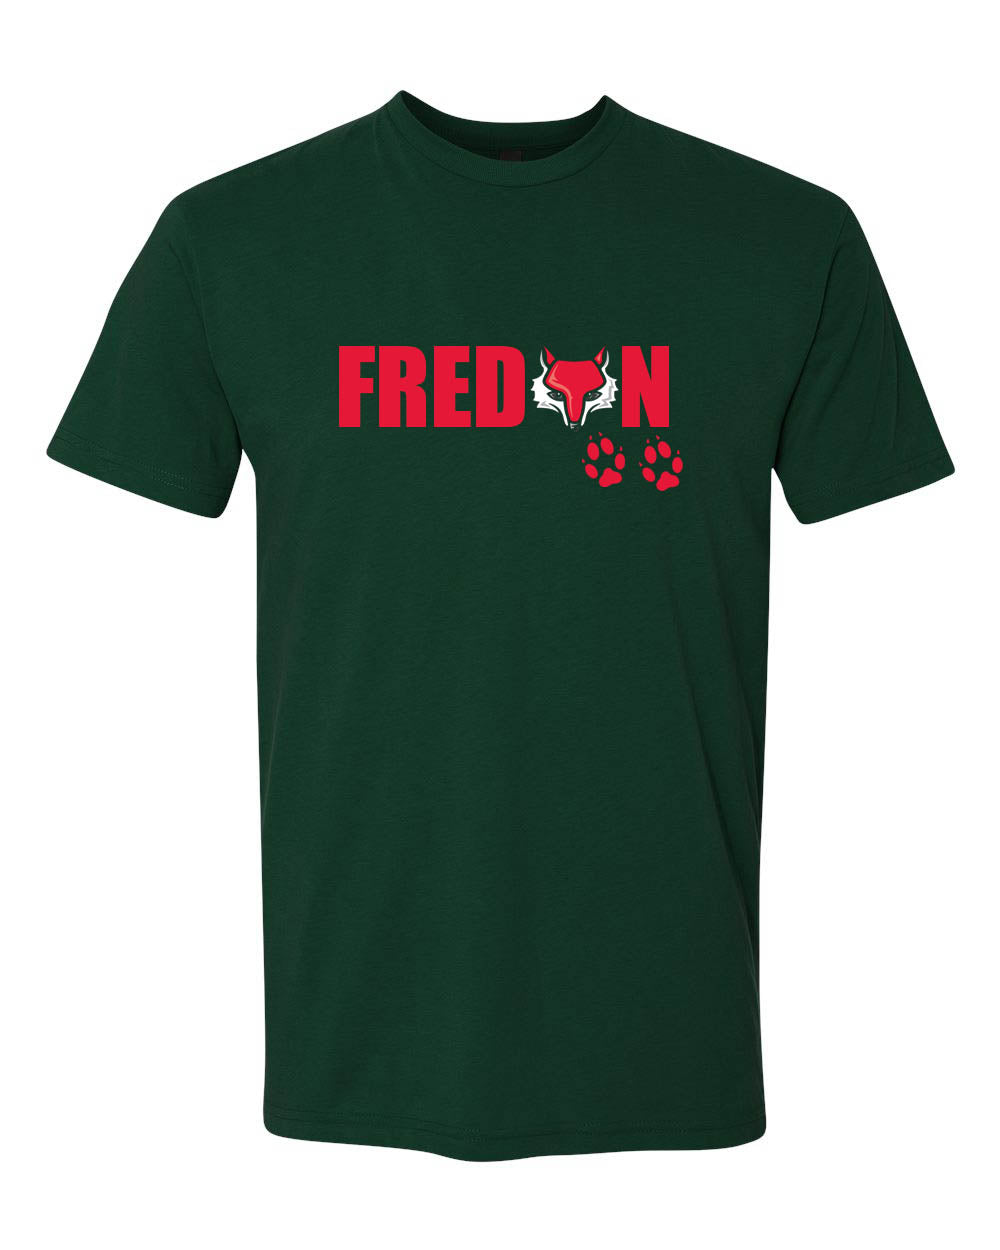 Fredon Design 6 T-Shirt